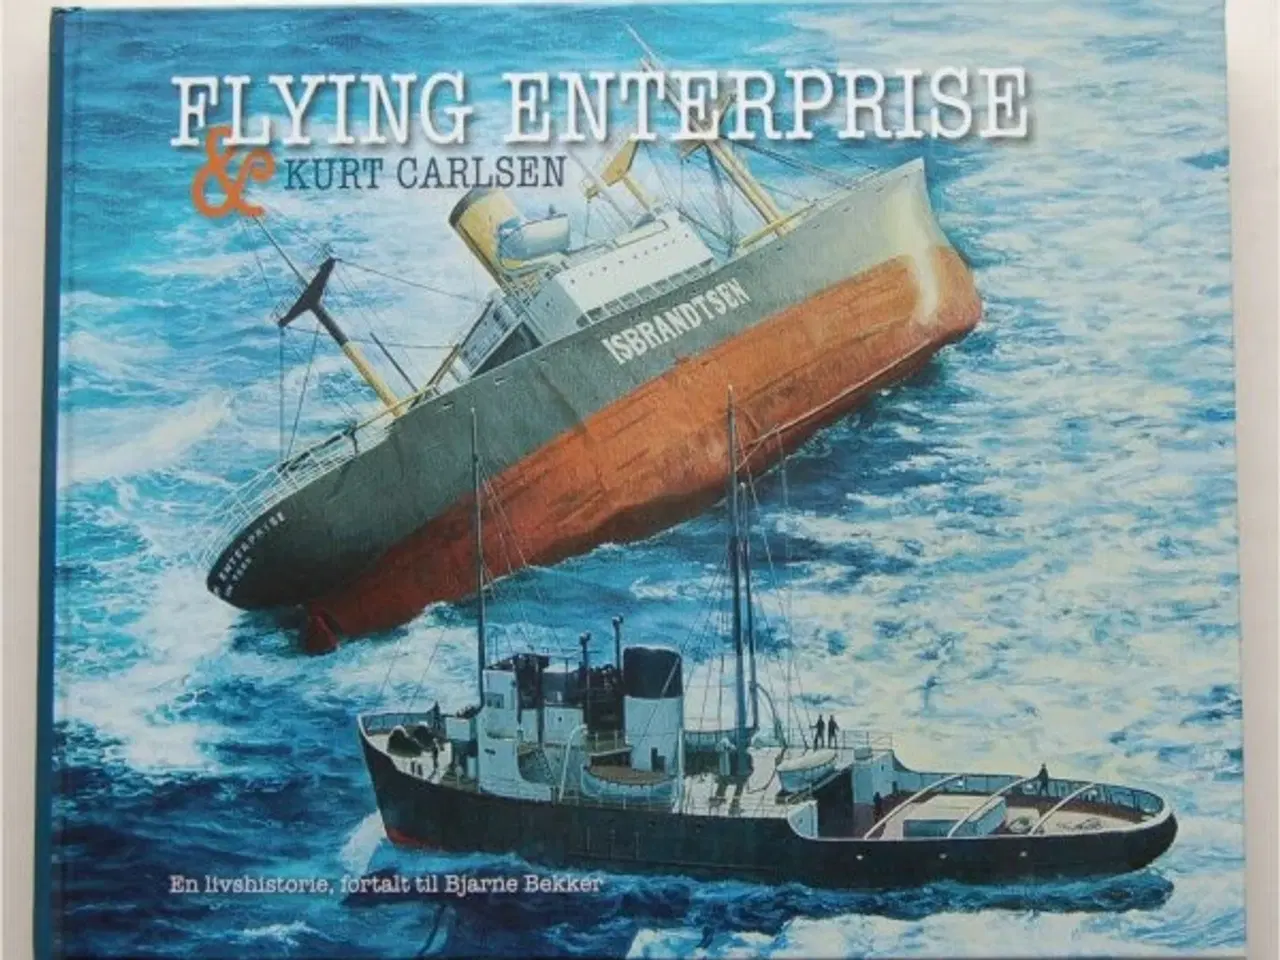 Billede 1 - FLYING ENTERPRISE & Kurt Carlsen